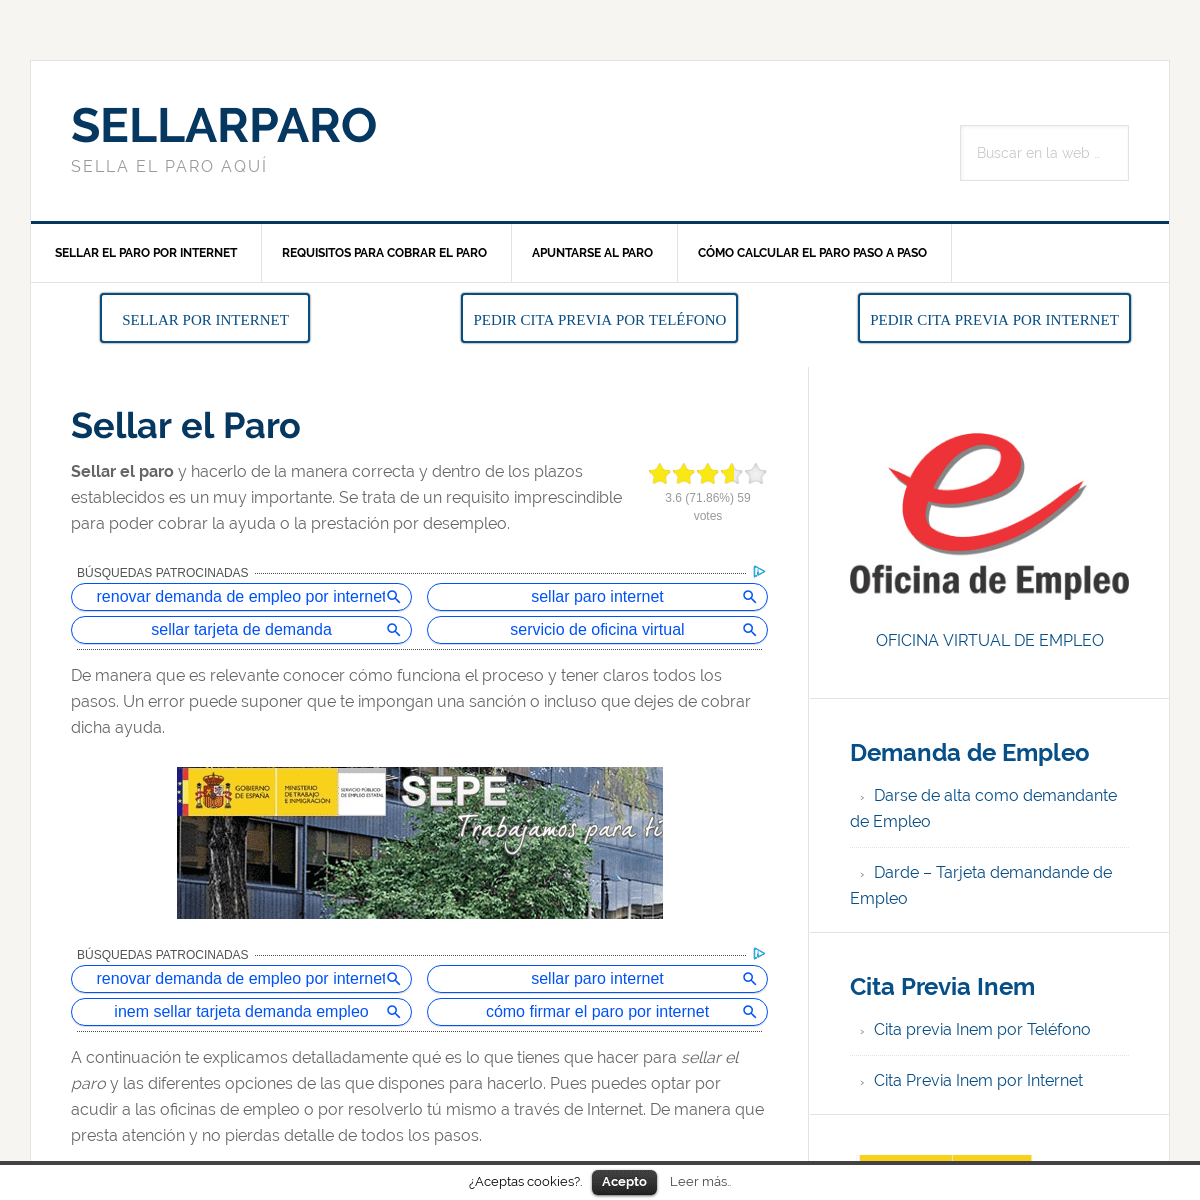 A complete backup of sellarparo.com